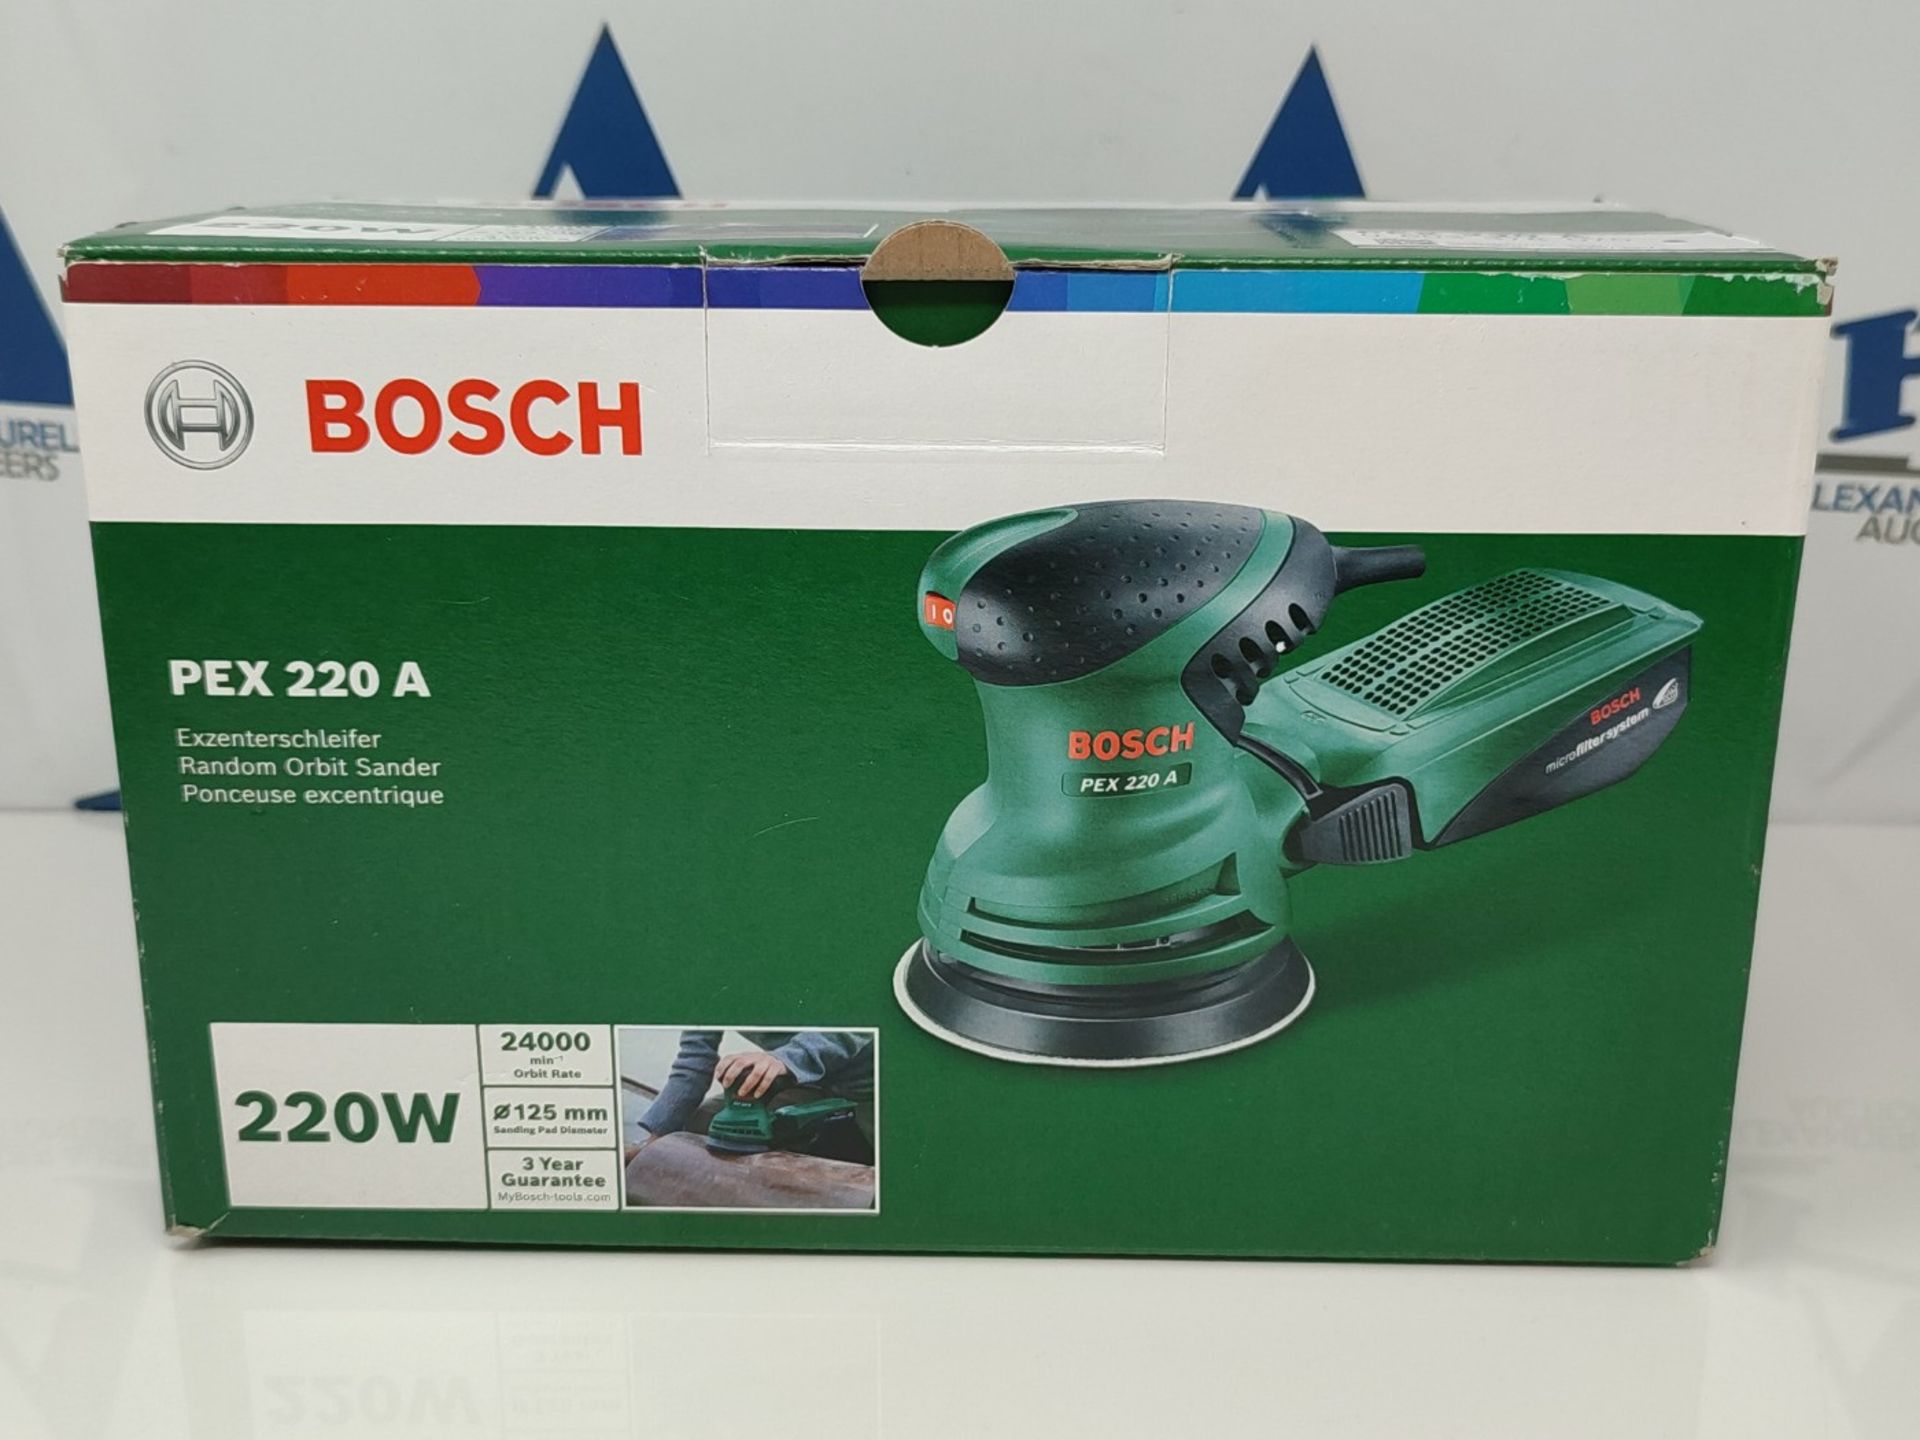 RRP £54.00 Bosch Home and Garden Random Orbit Sander PEX 220 A (220 W, in carton packaging) - Image 2 of 3